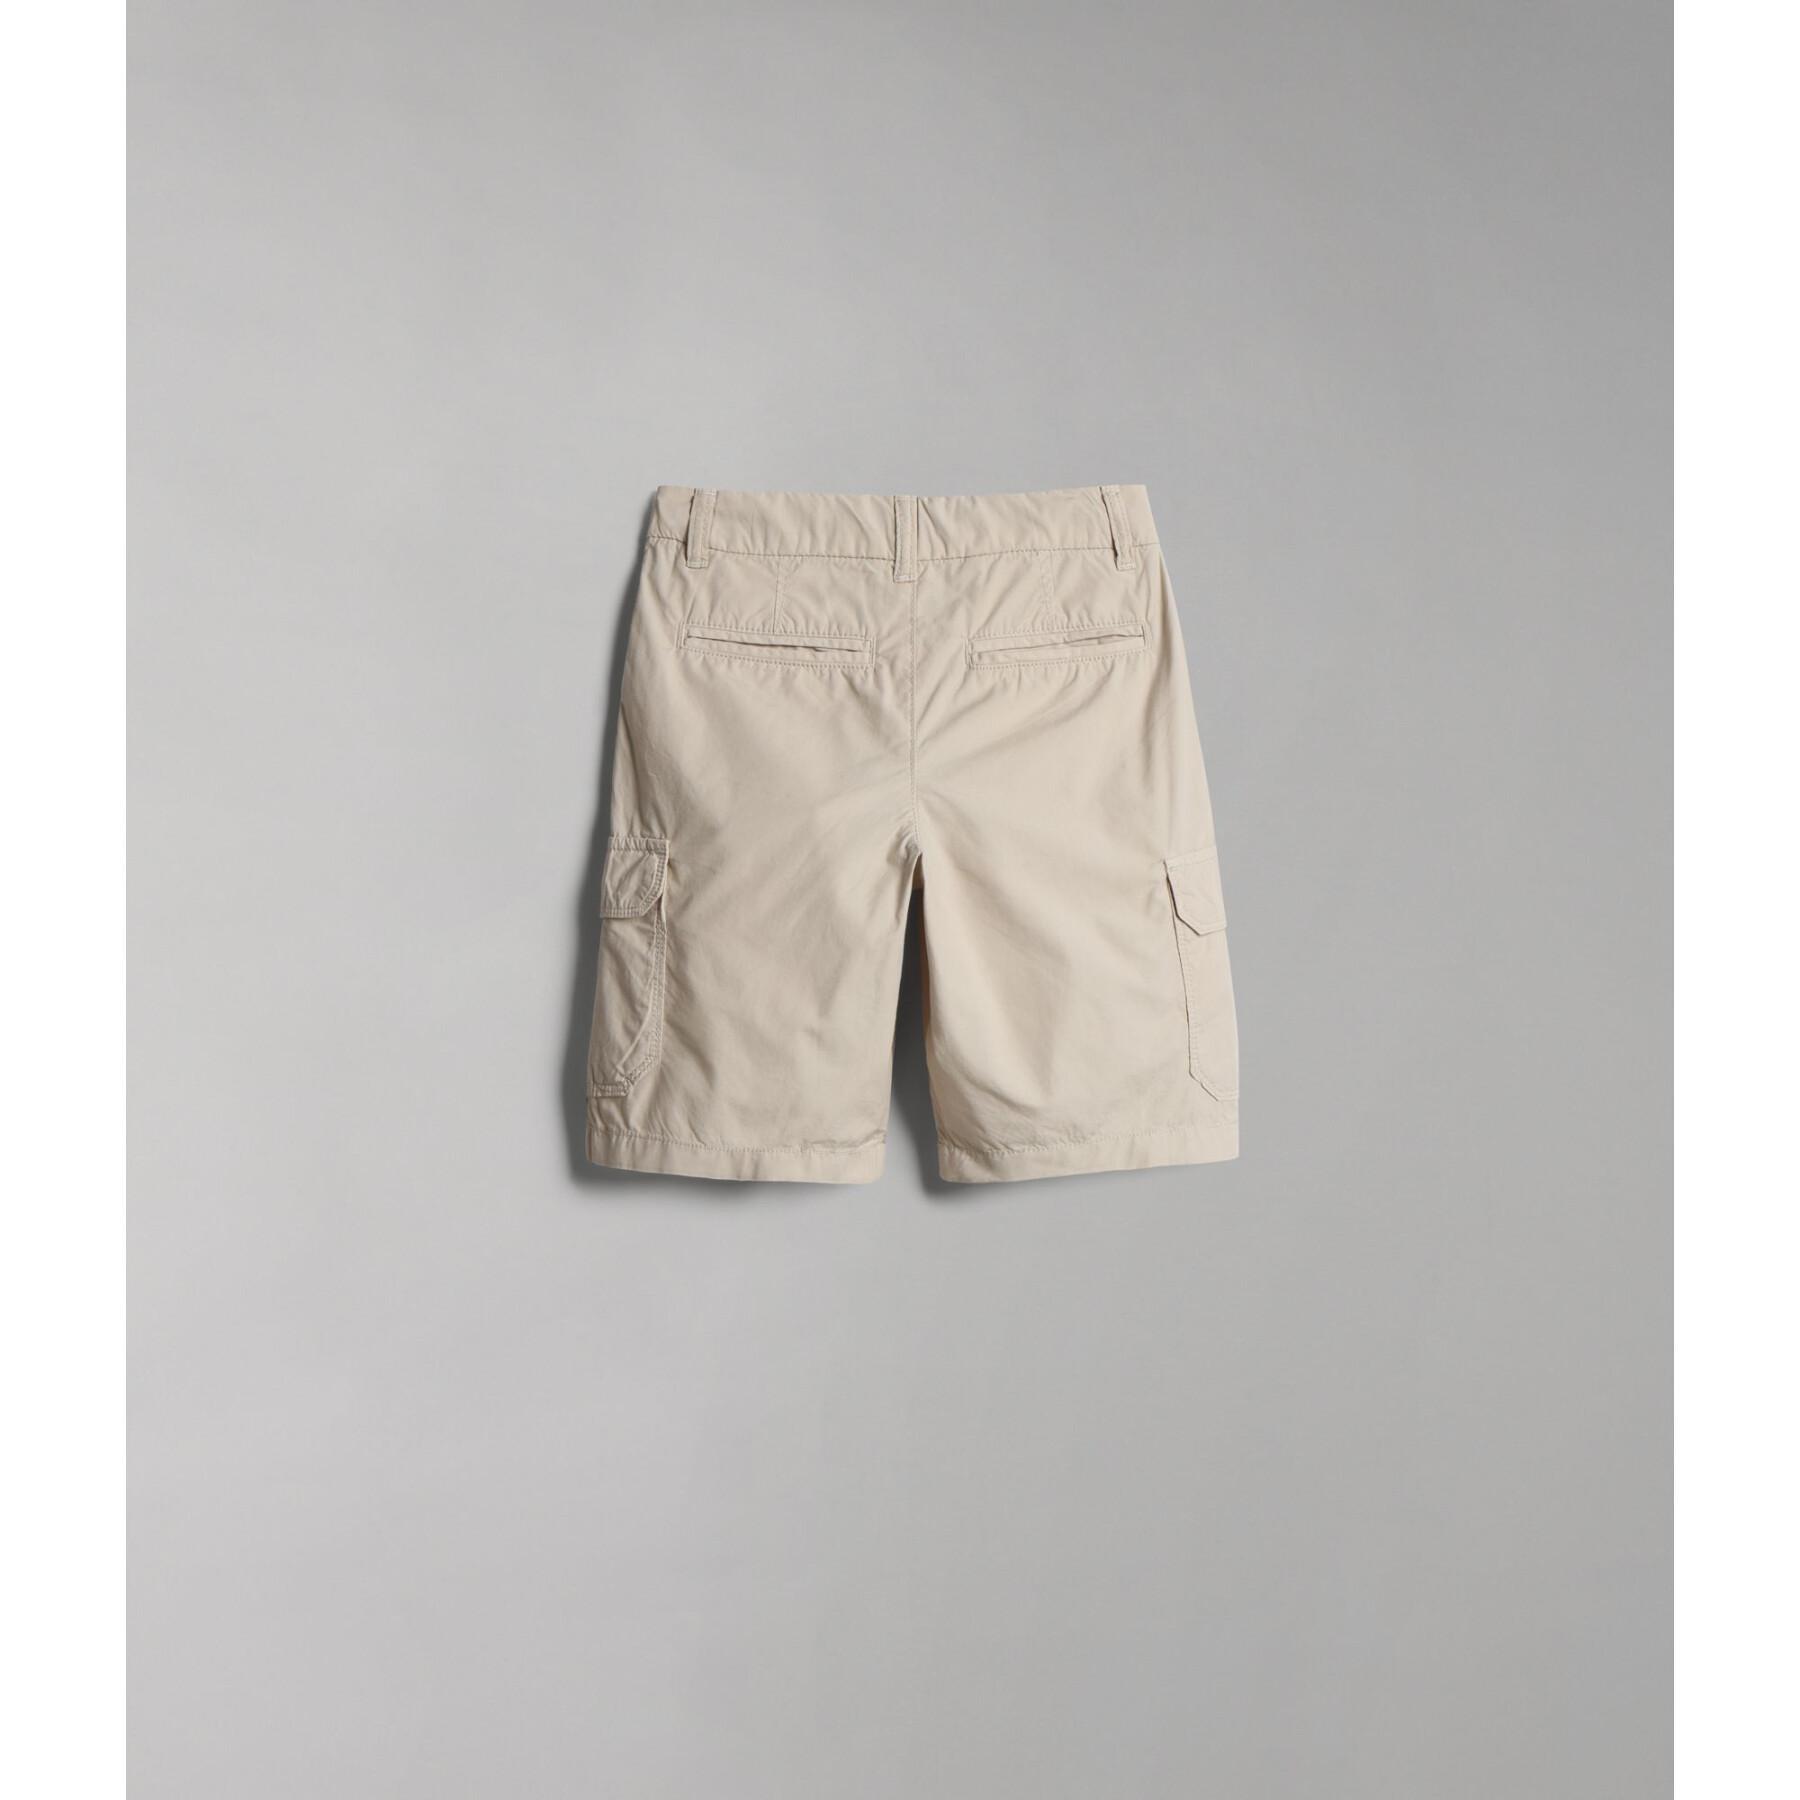 Pantalón corto para niños Napapijri Noto